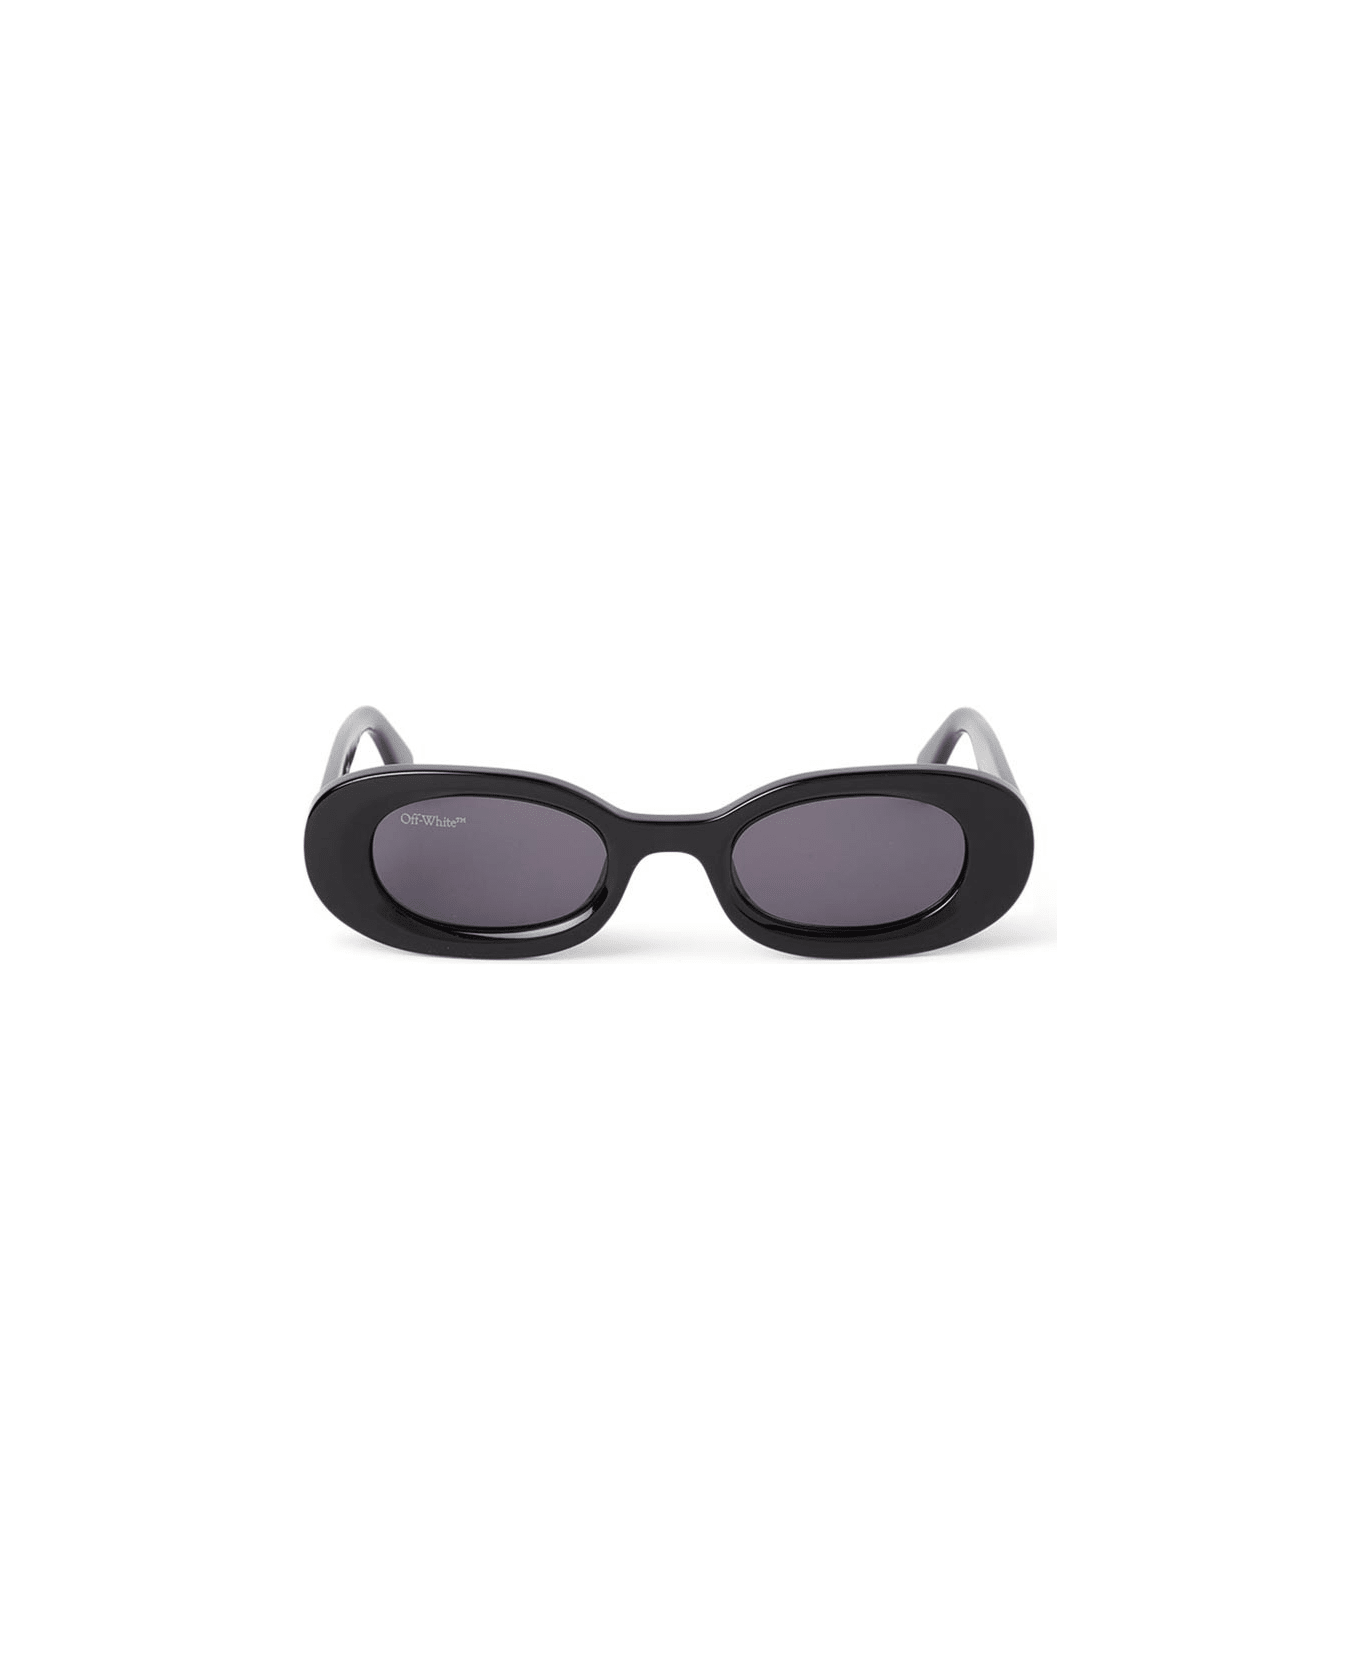 Off-White Oeri087 Amalfi Sunglasses - Nero/Grigio サングラス